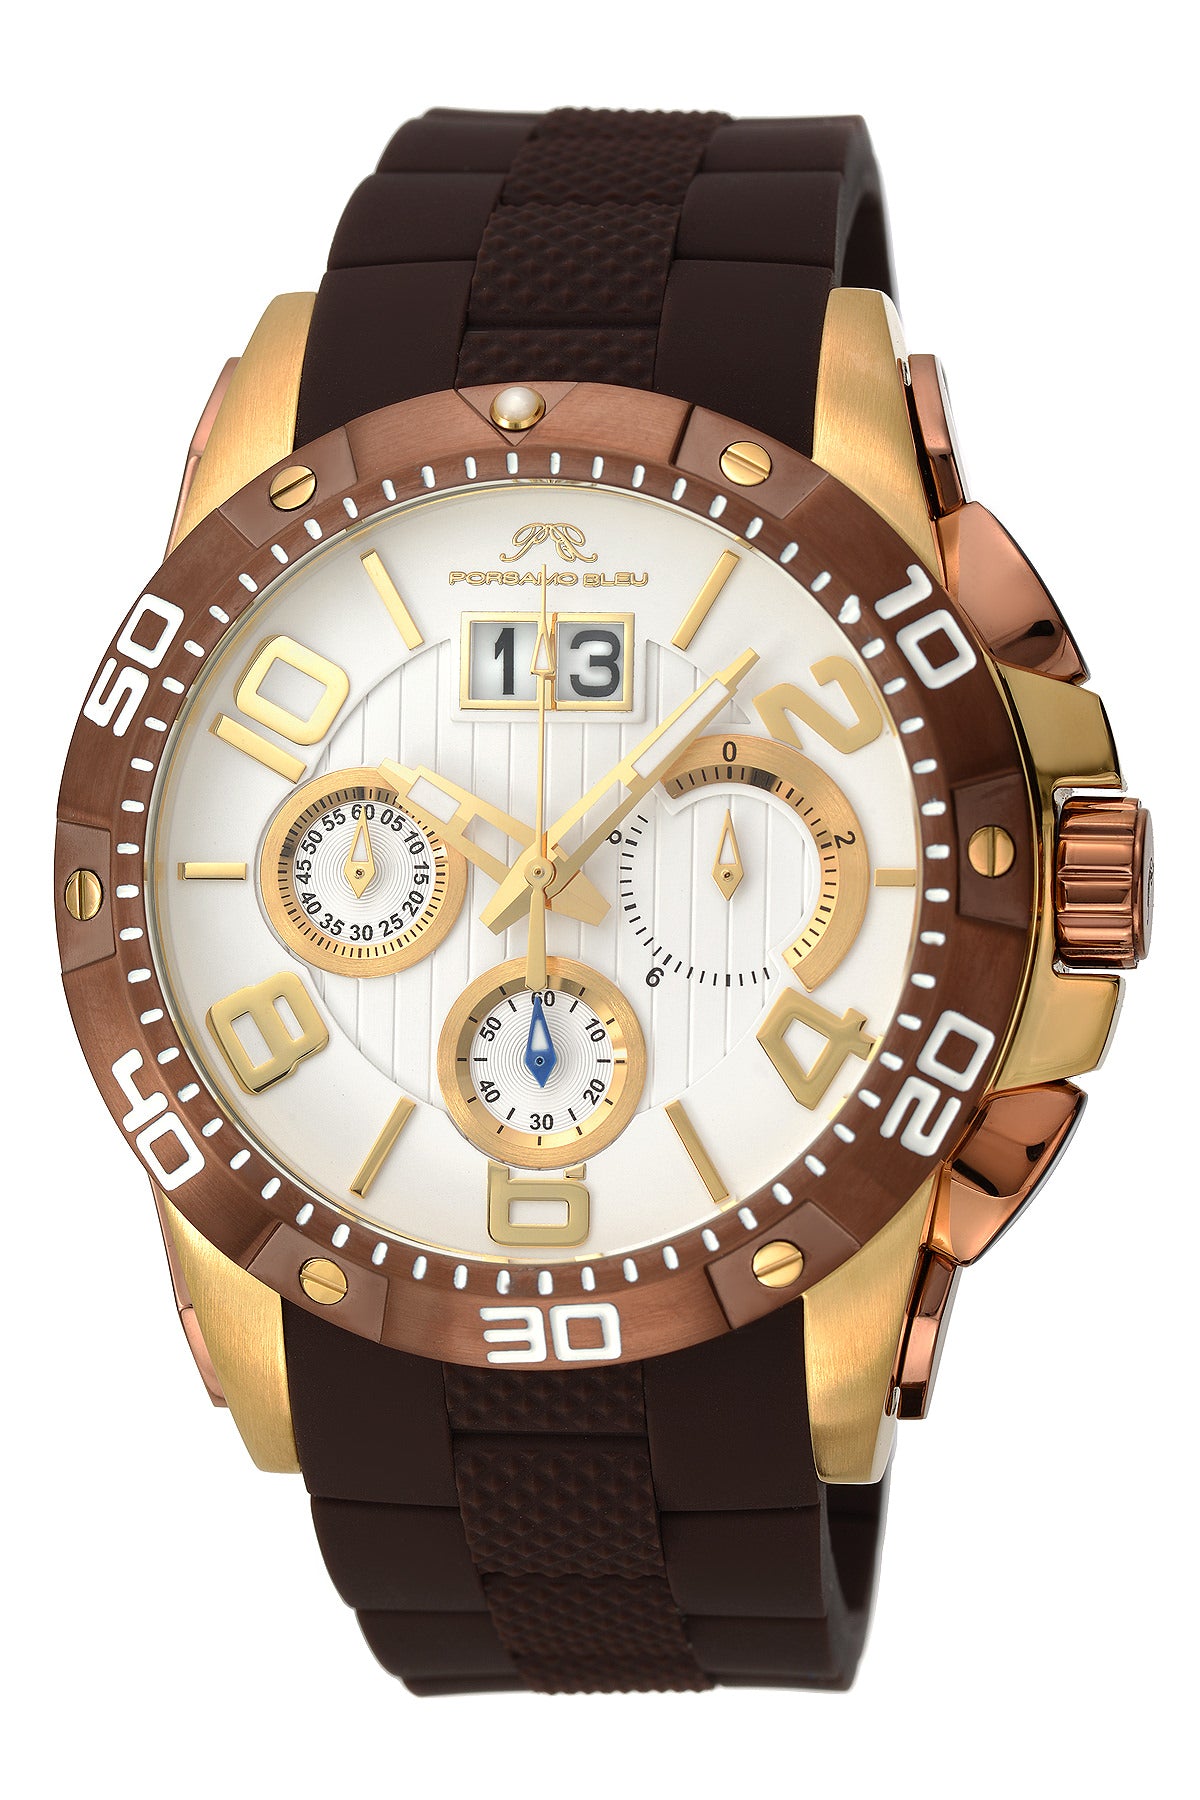 Porsamo Bleu Francoise Luxury Chronograph Men's Silicone Watch, Gold, Brown 245BFRR